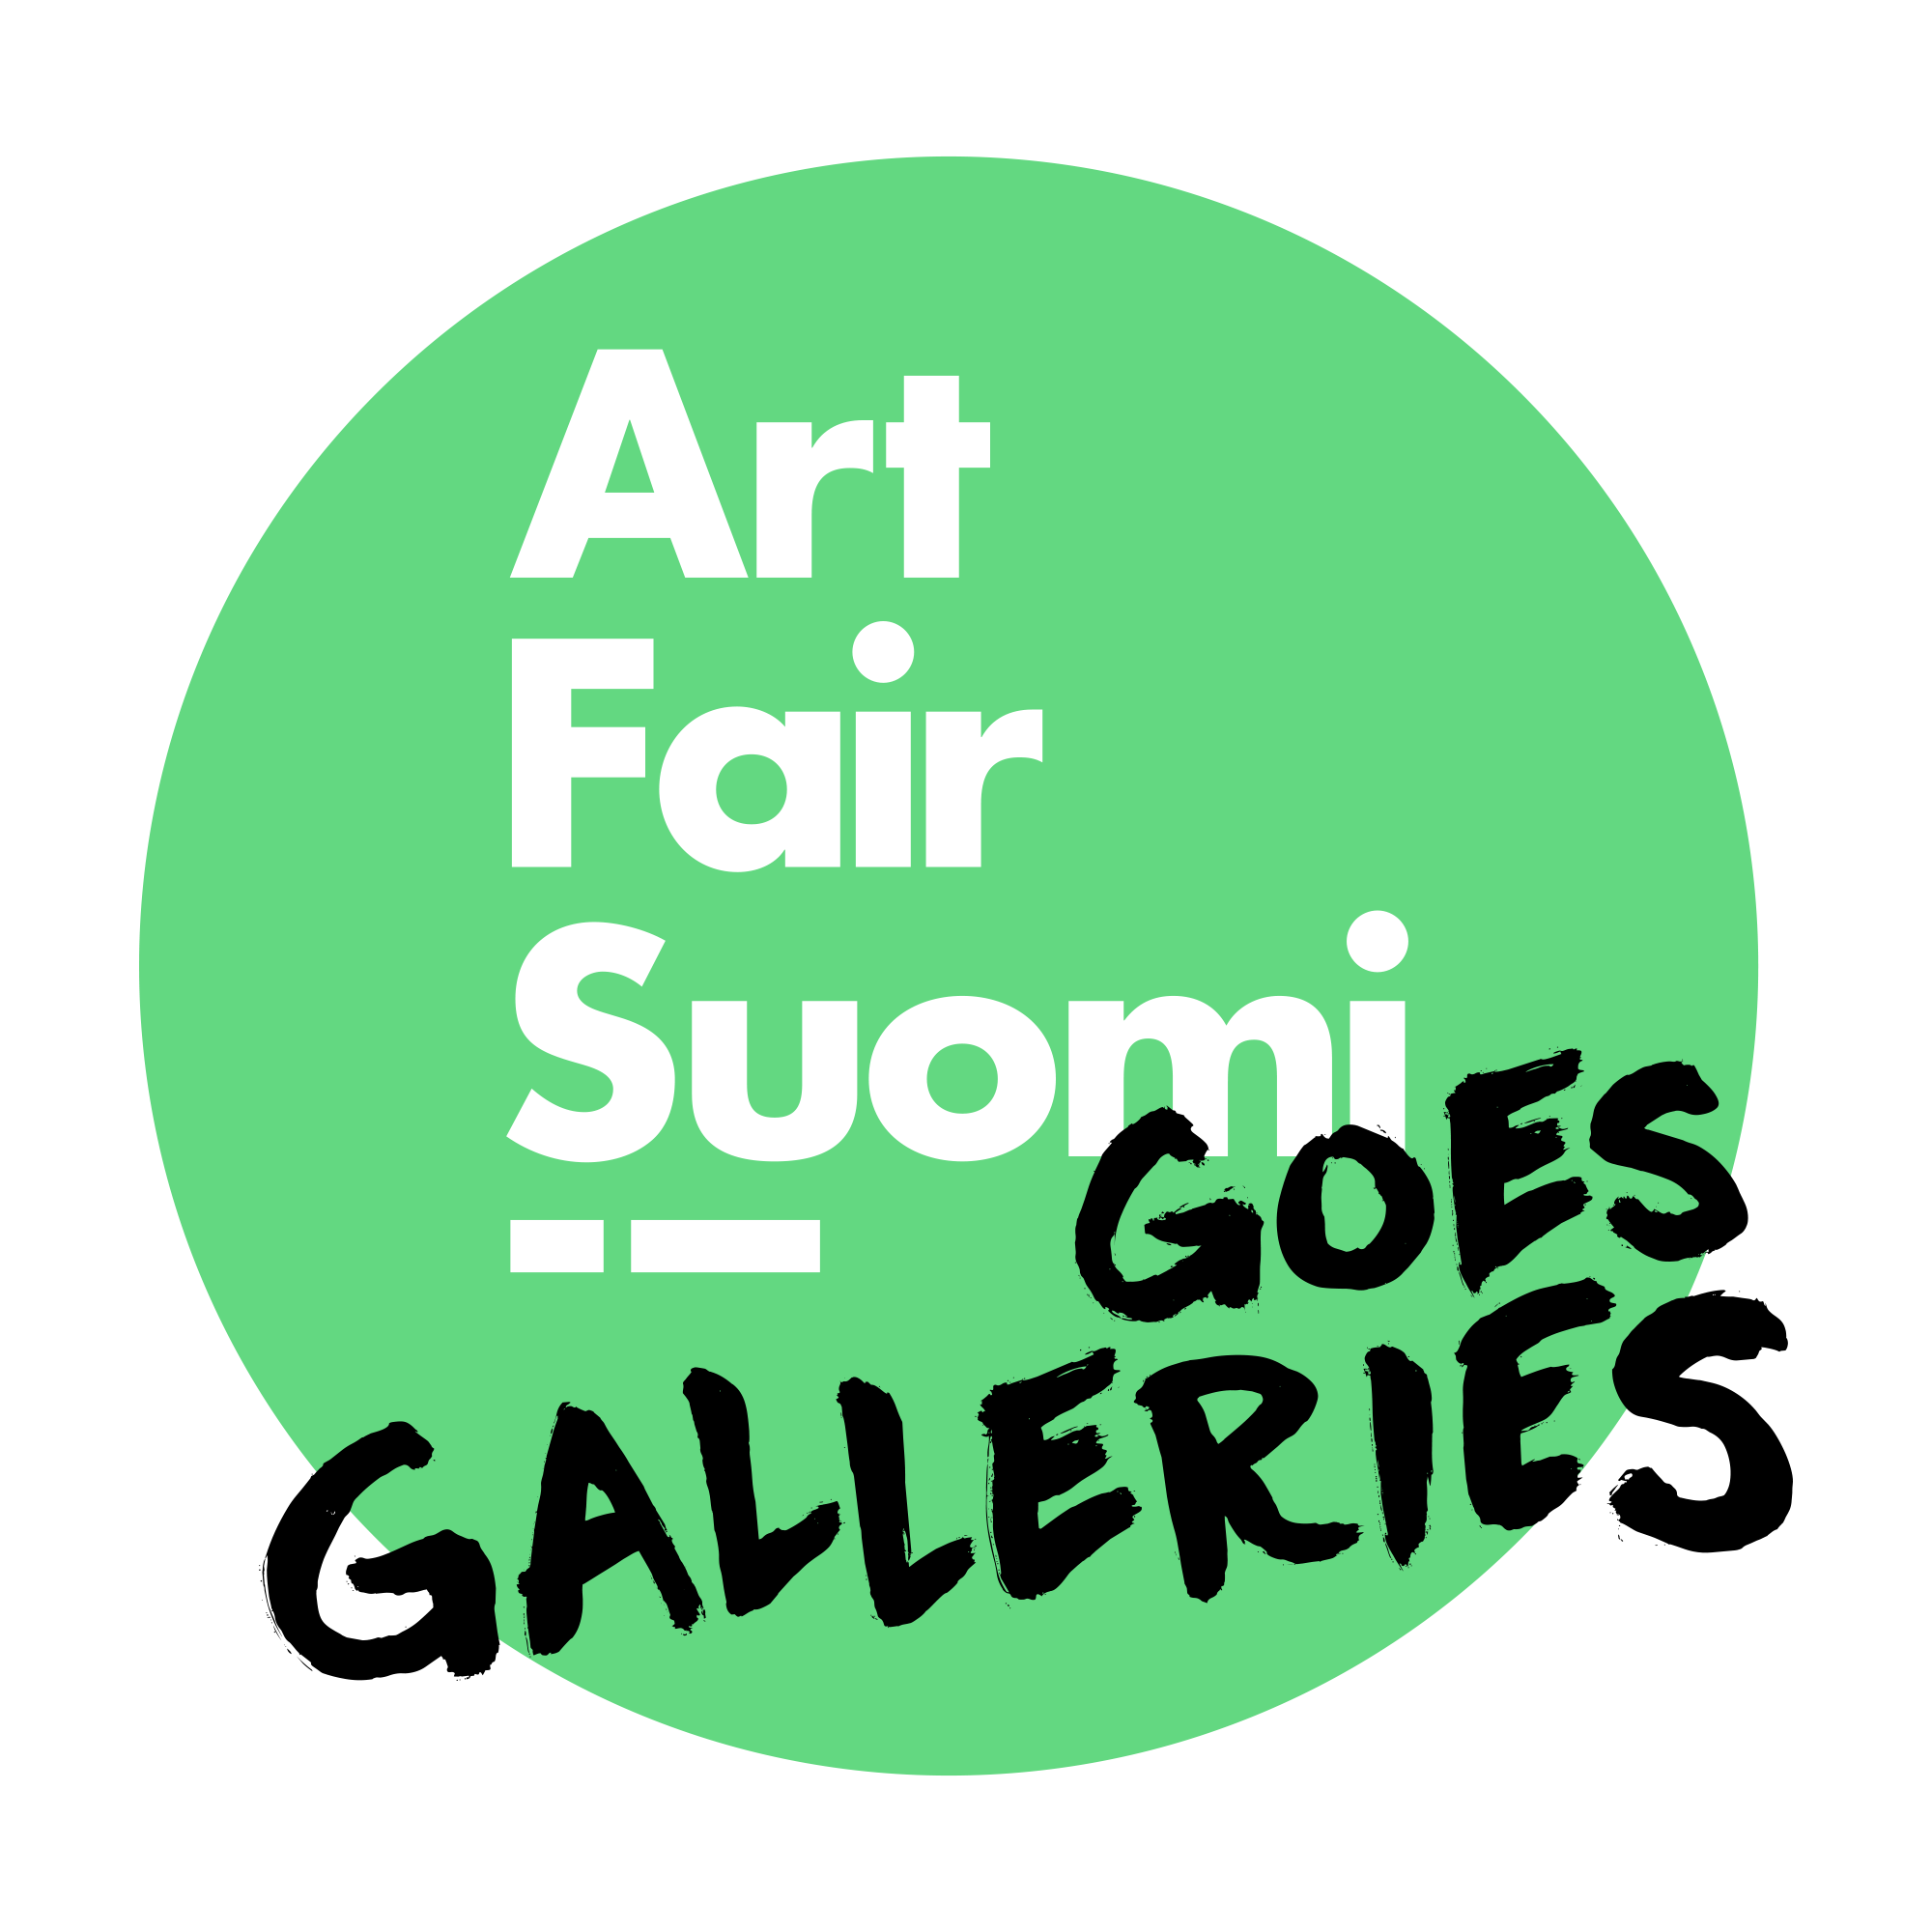 Art Fair Suomi Goes Galleries -logo